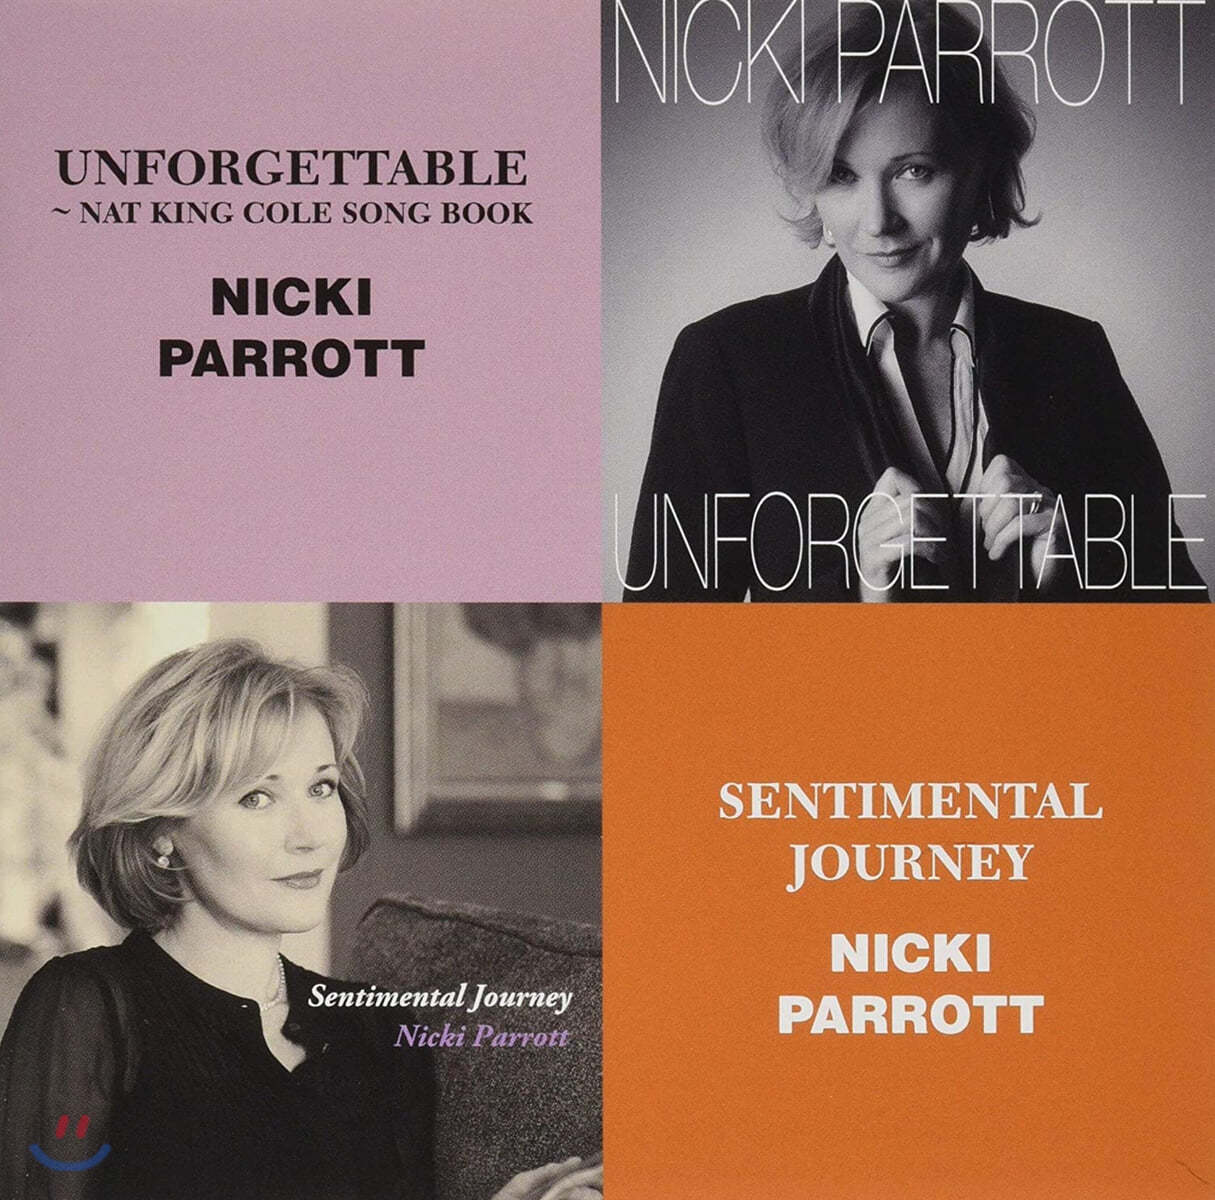 Nicki Parrott (니키 패럿) - Unforgettable + Sentimental Journey